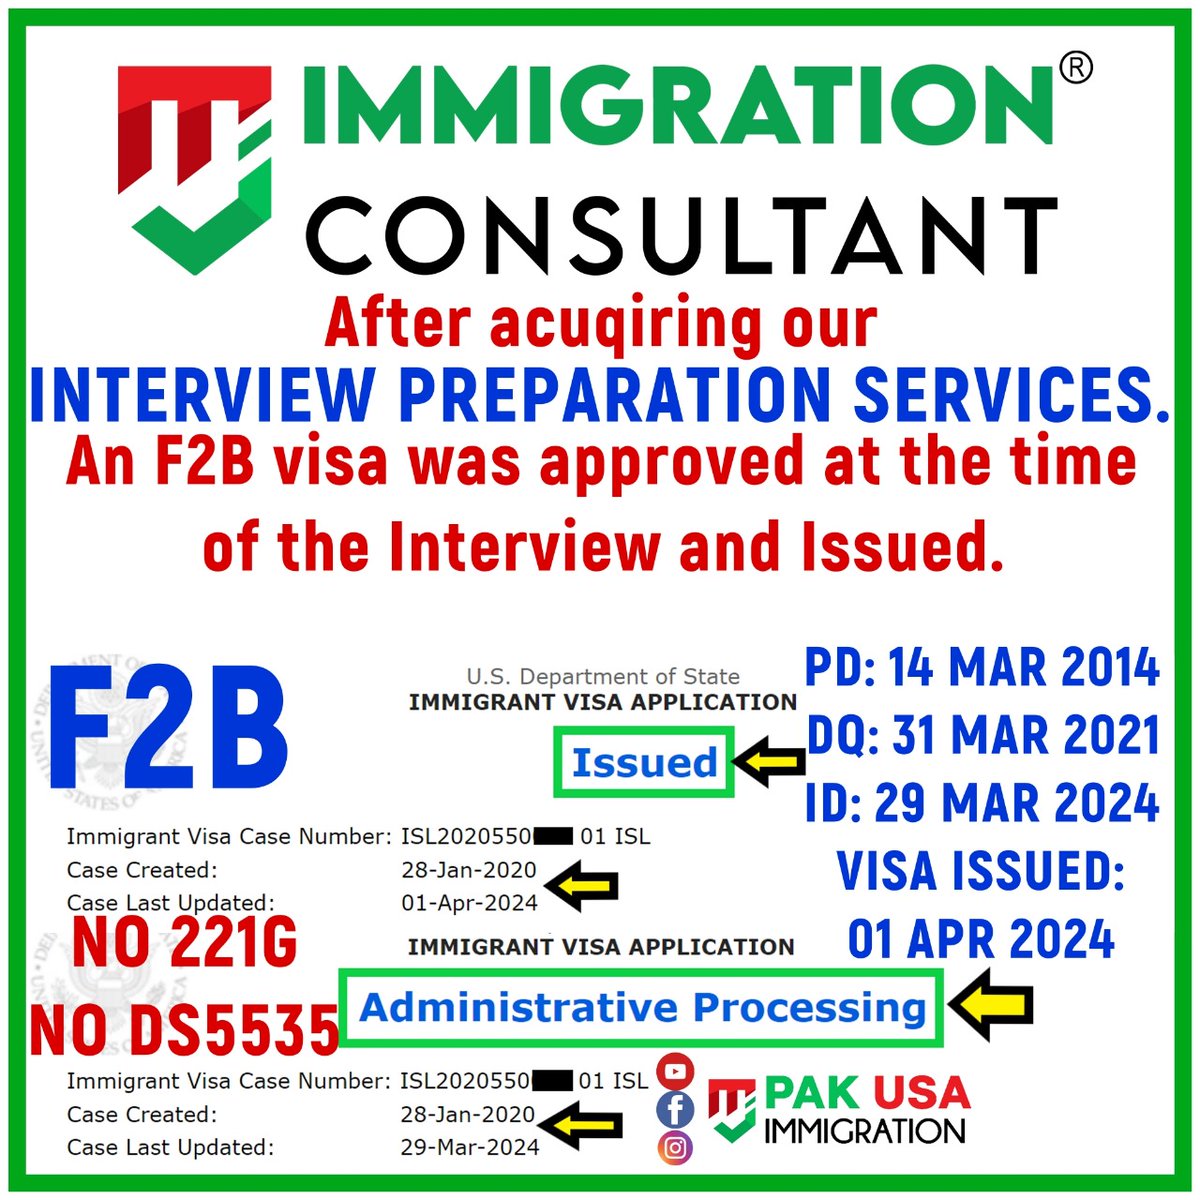 F2B Visa ISSUED at US Embassy ISLAMABAD.
No 221G
No DS5535

#usimmigration #PakUSAImmigration #MJImmigrationConsultant #PakUSImmigration #USVisa #USCIS #NVC #immigrationconsultant #PAKUSAt75 #USEmbassy #immigration #ImmigrationExperts #ImmigrationPolicy #ImmigrationConsultancy